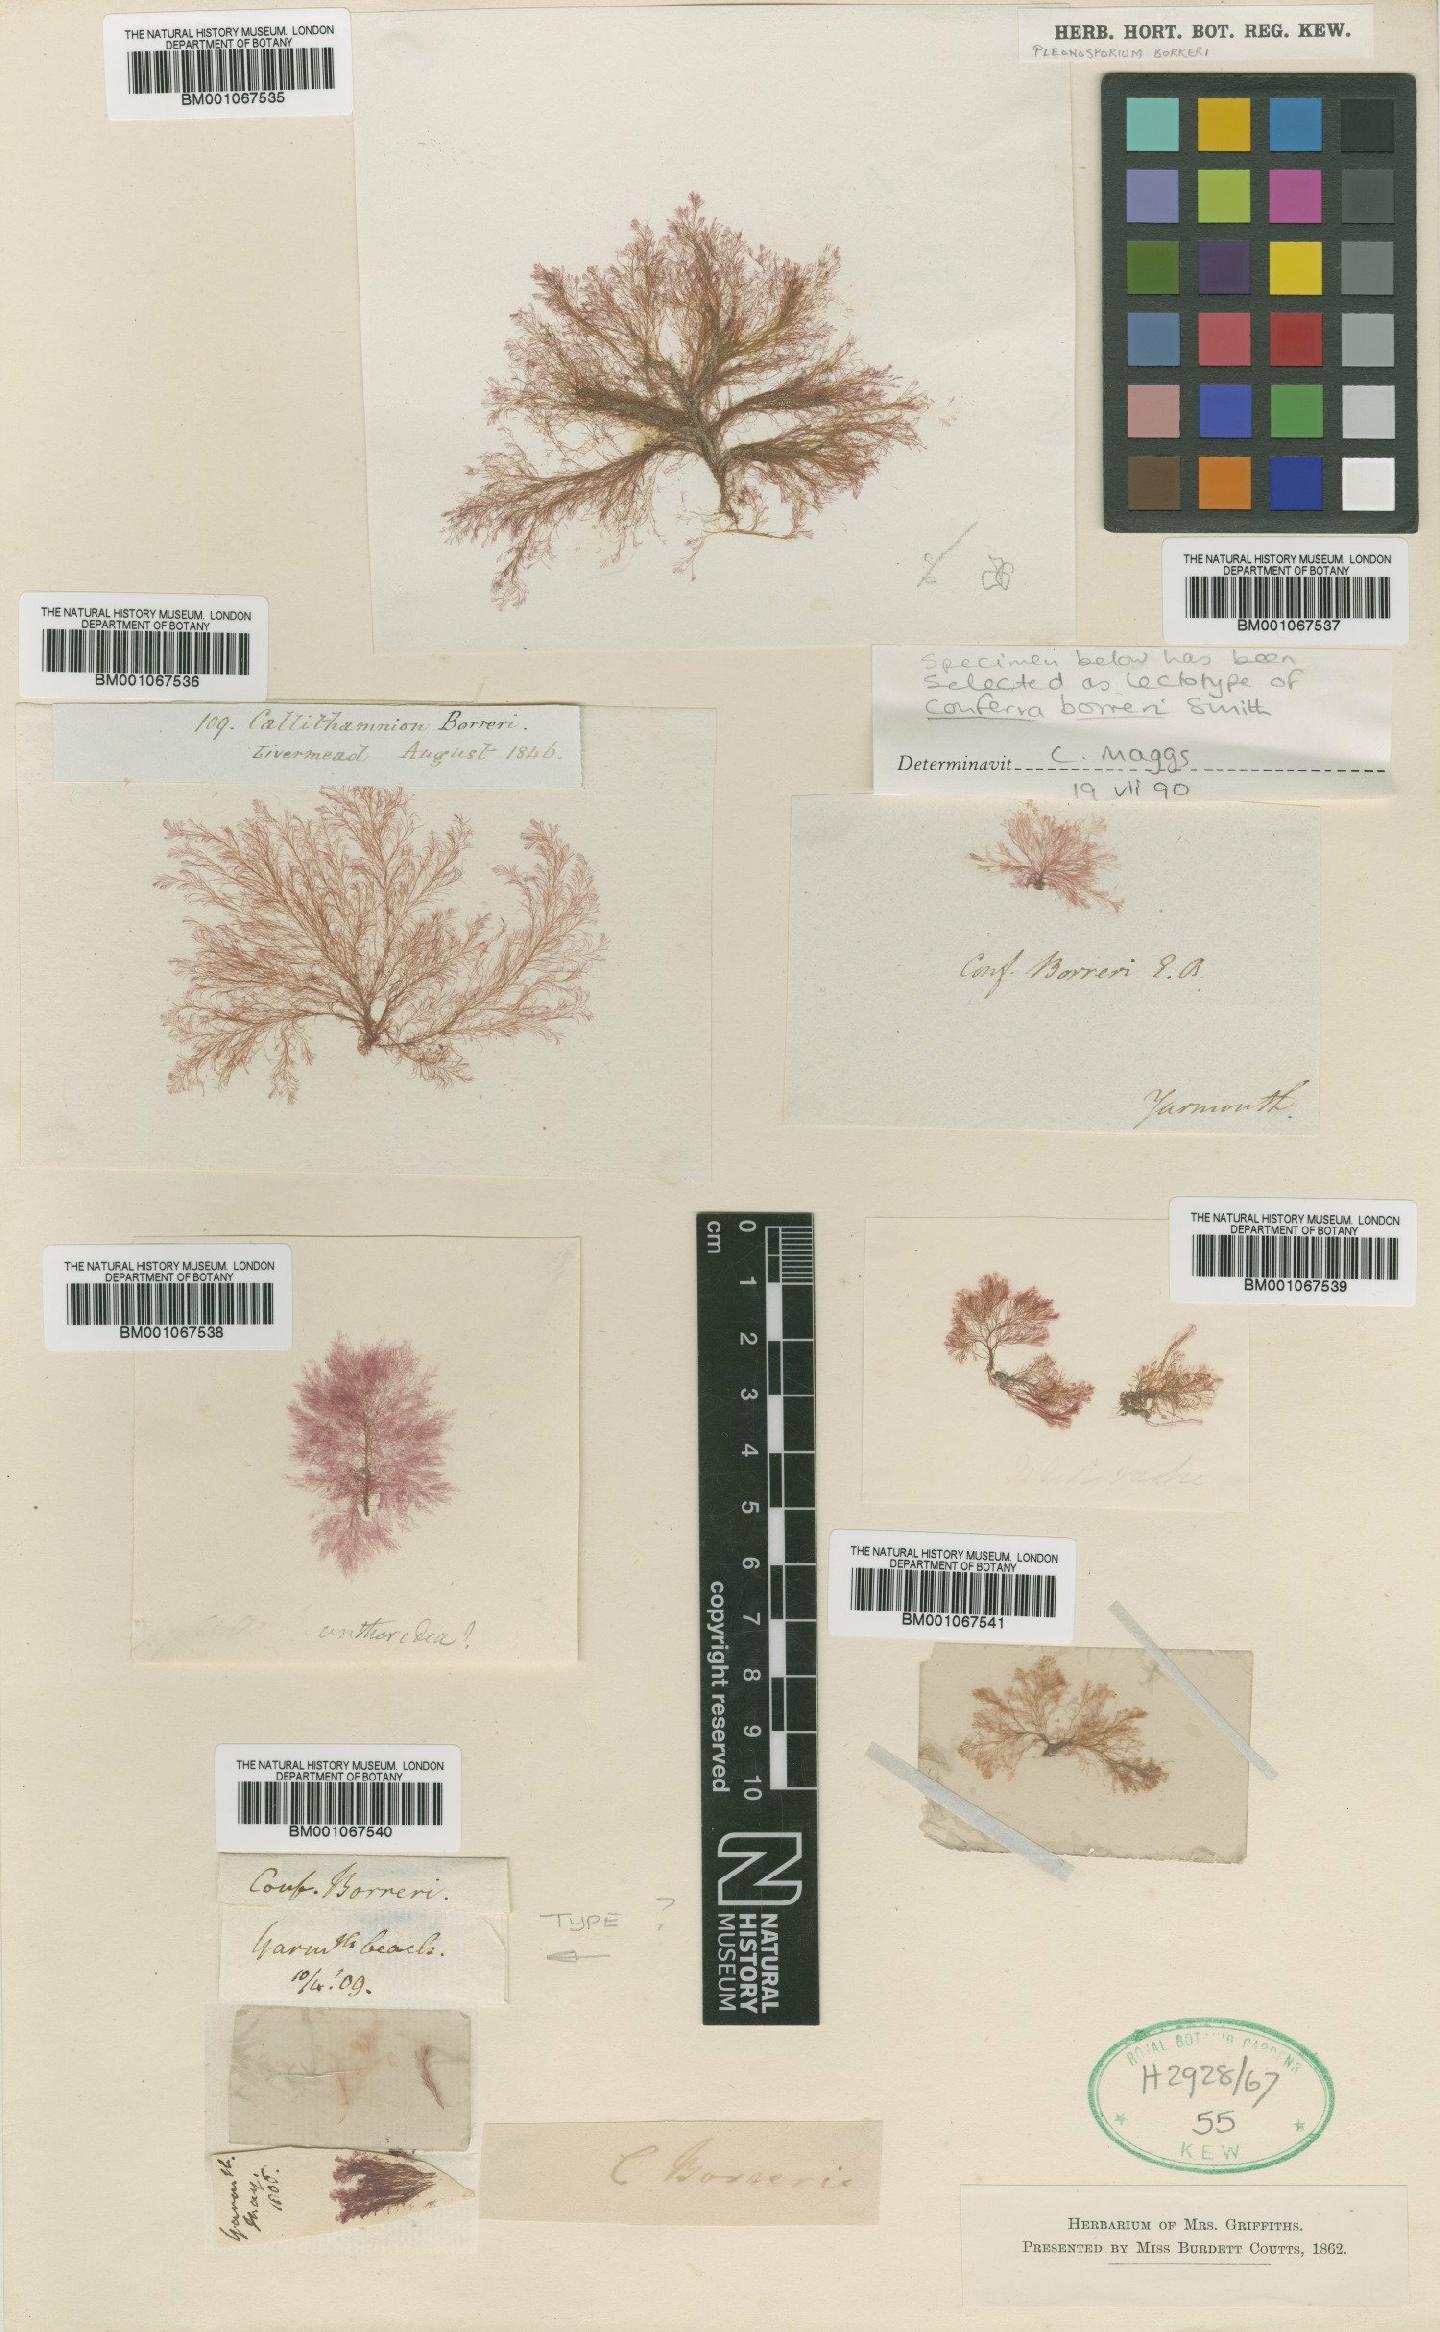 To NHMUK collection (Pleonosporium borreri (Sm.) N�geli; Lectotype; NHMUK:ecatalogue:2300163)